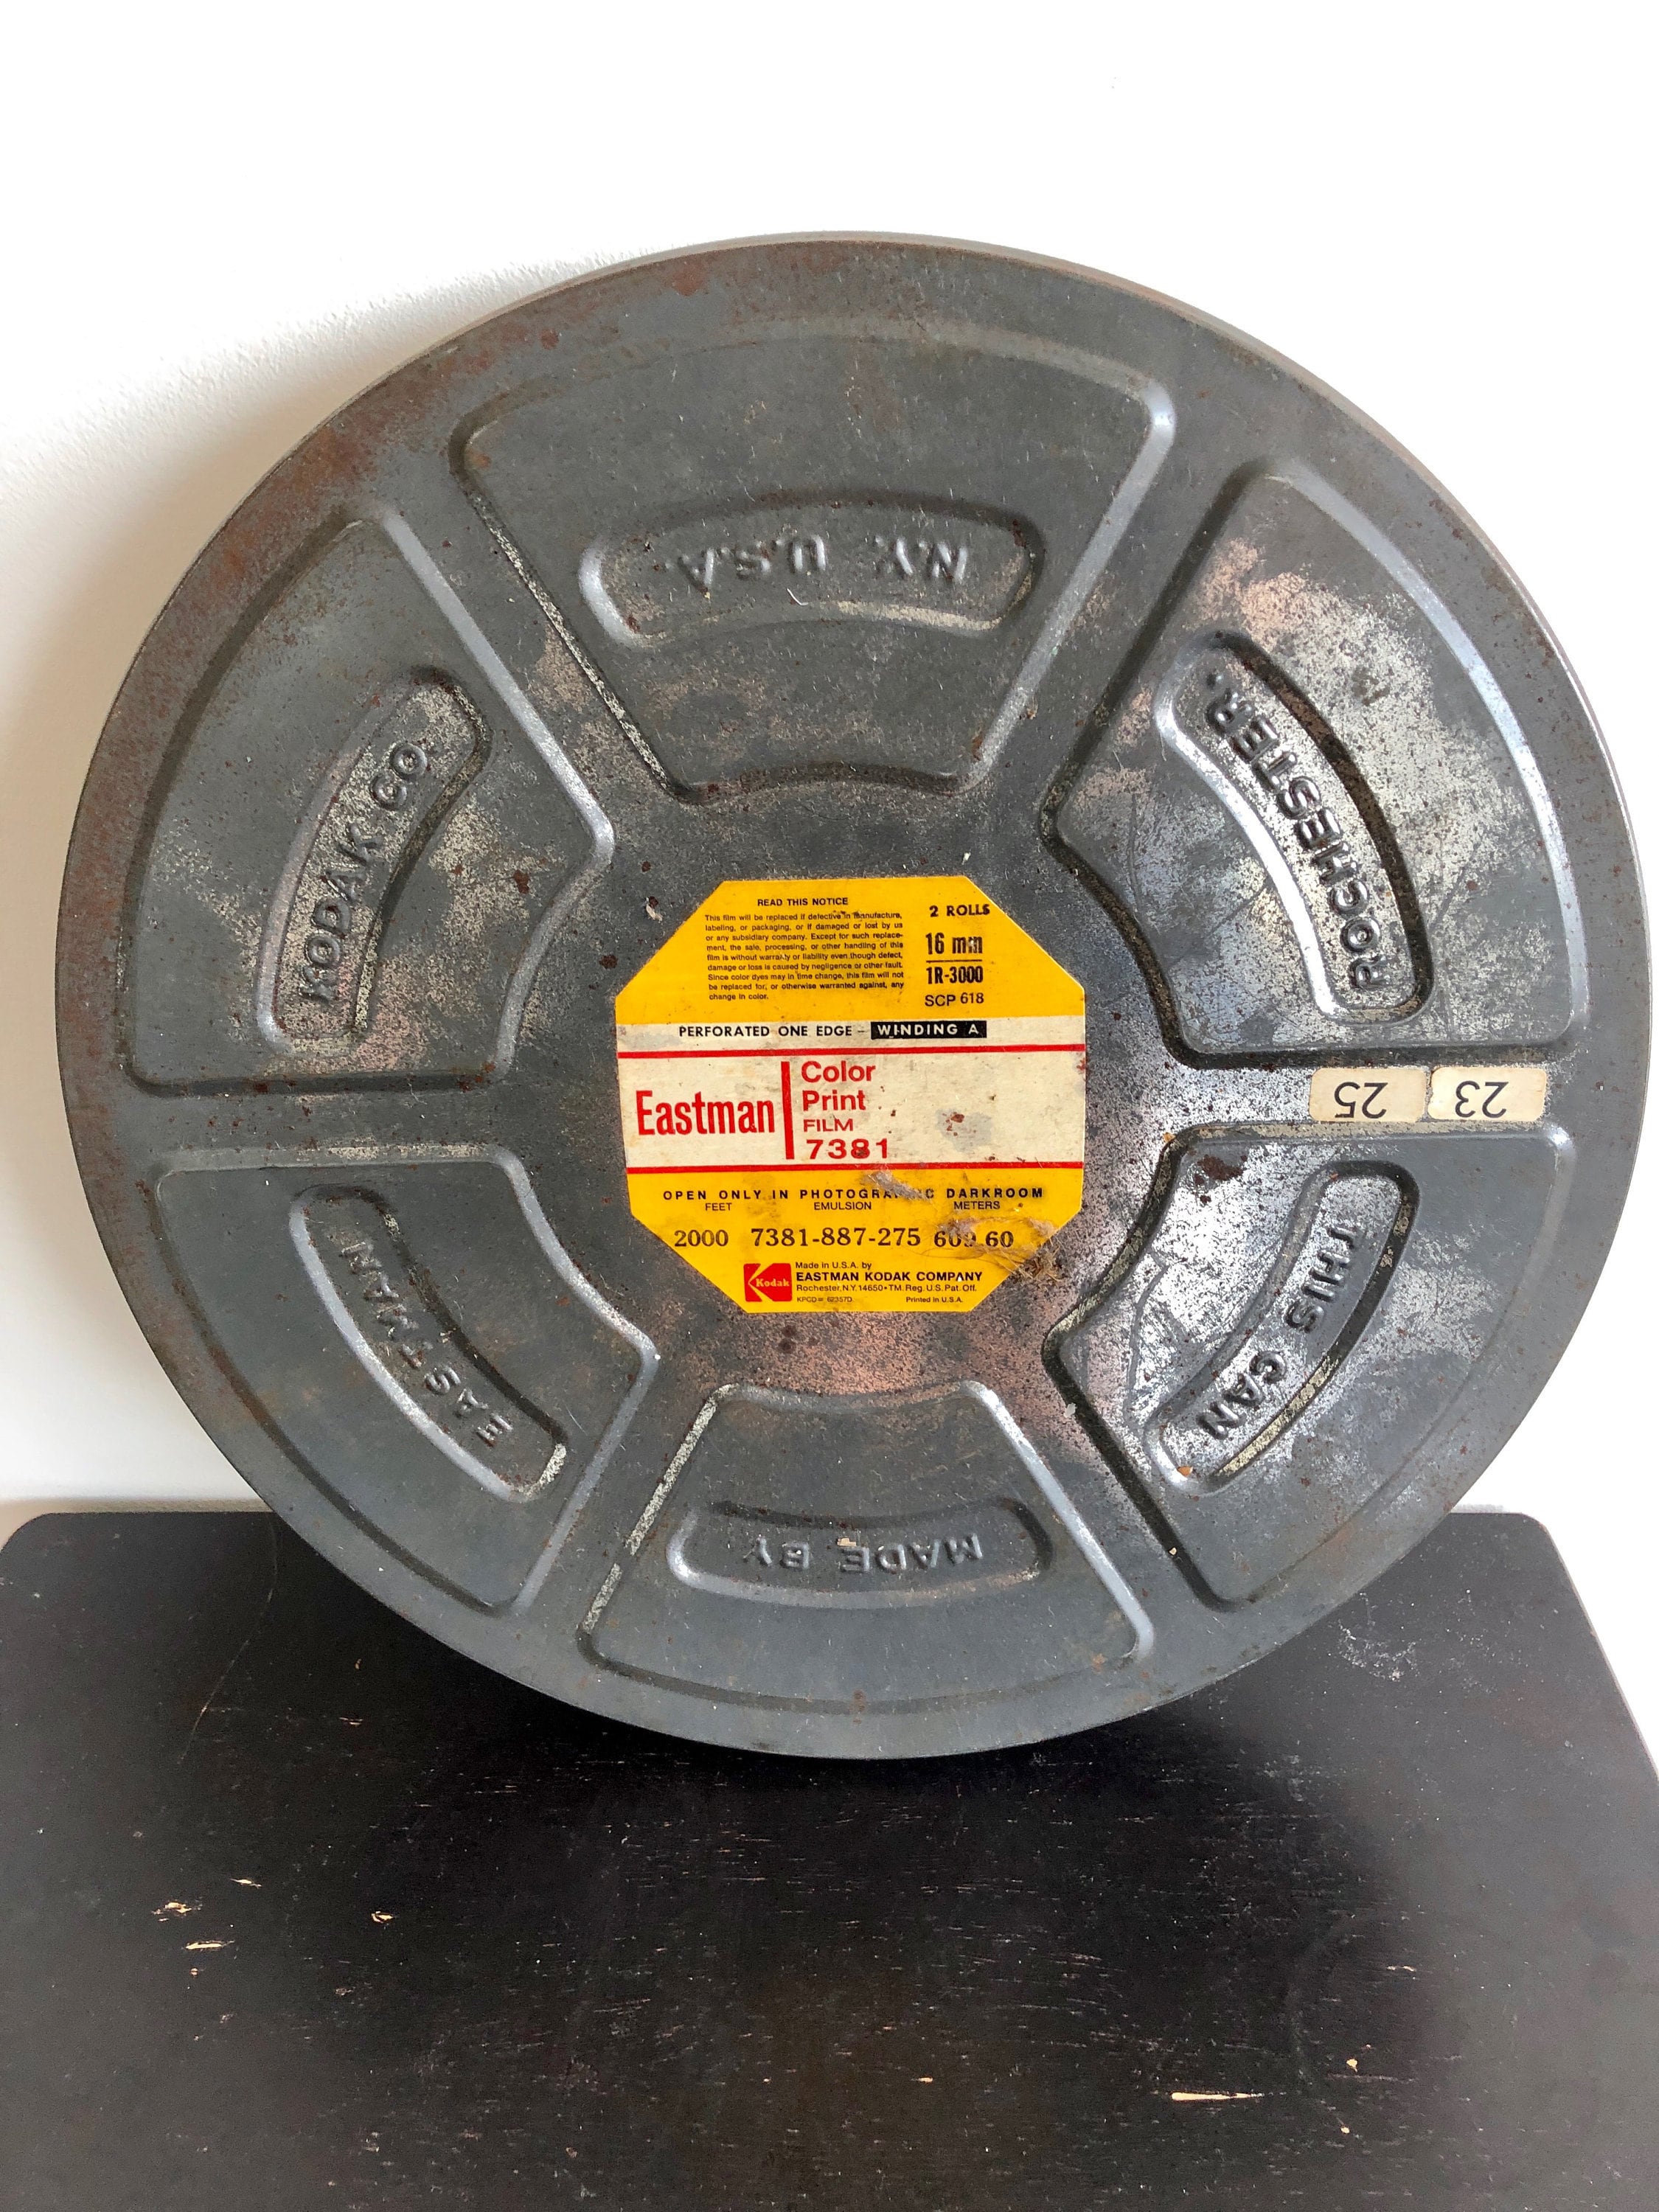 Vintage EASTMAN KODAK FILM Canister, 16 Mm Film Can, Old Kodak